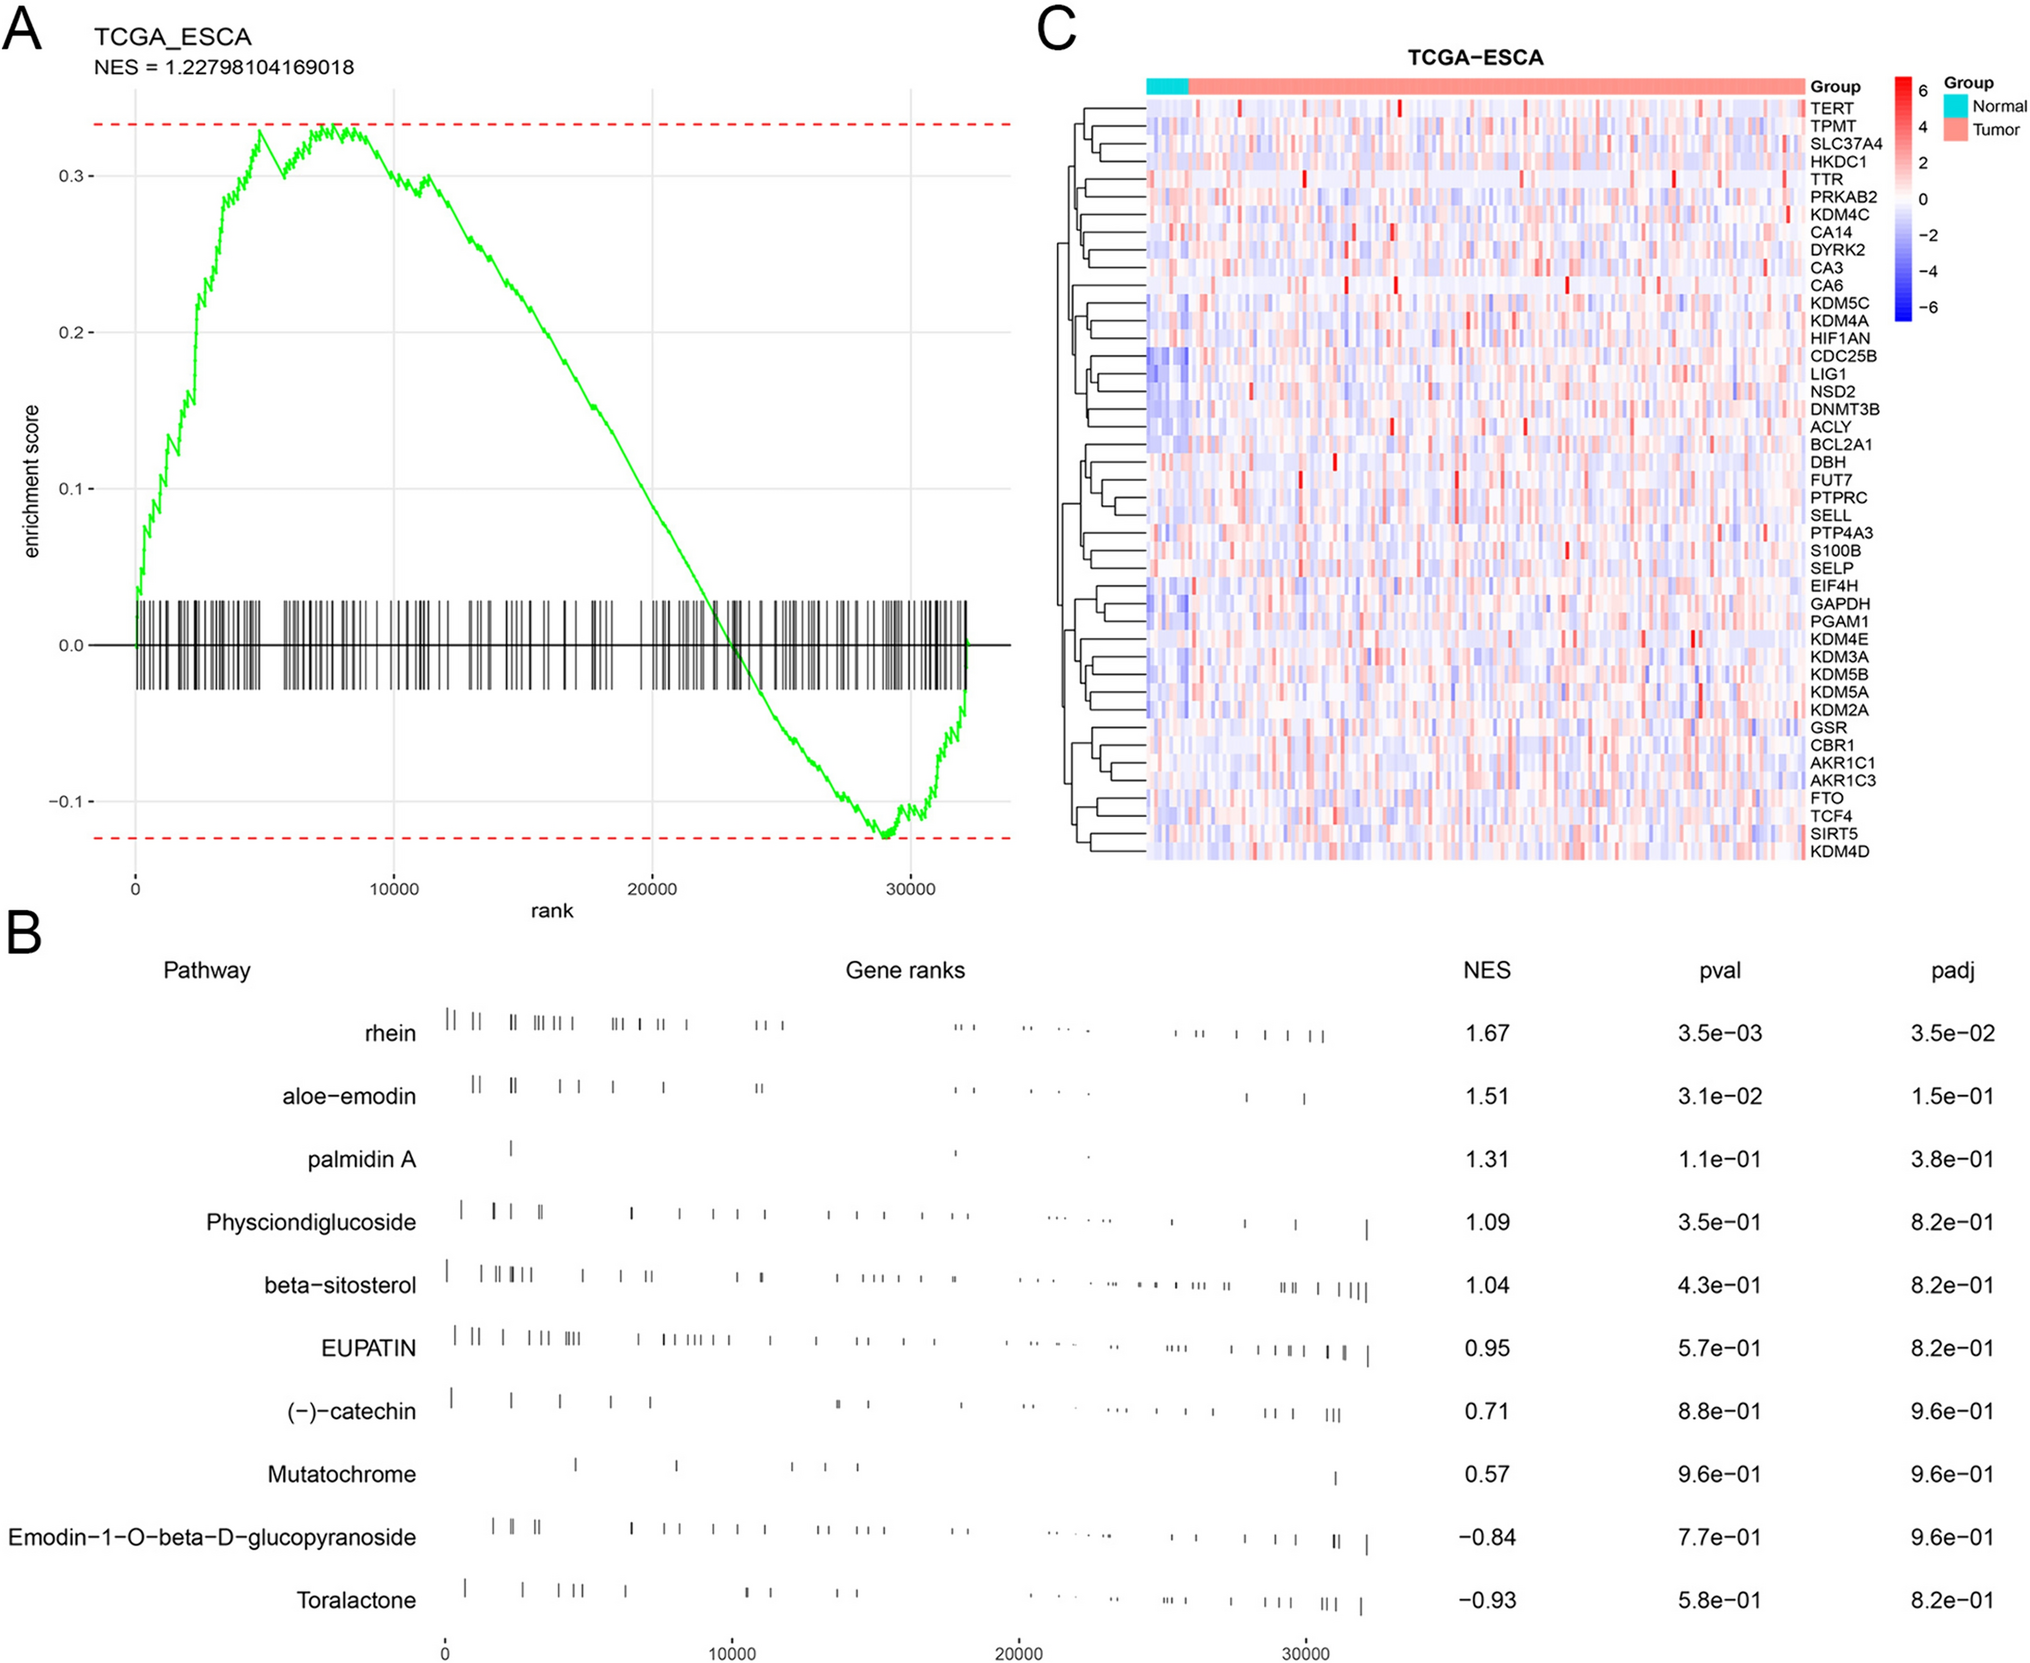 Rhein suppresses esophageal cancer development by regulating cell cycle through DNMT3B gene